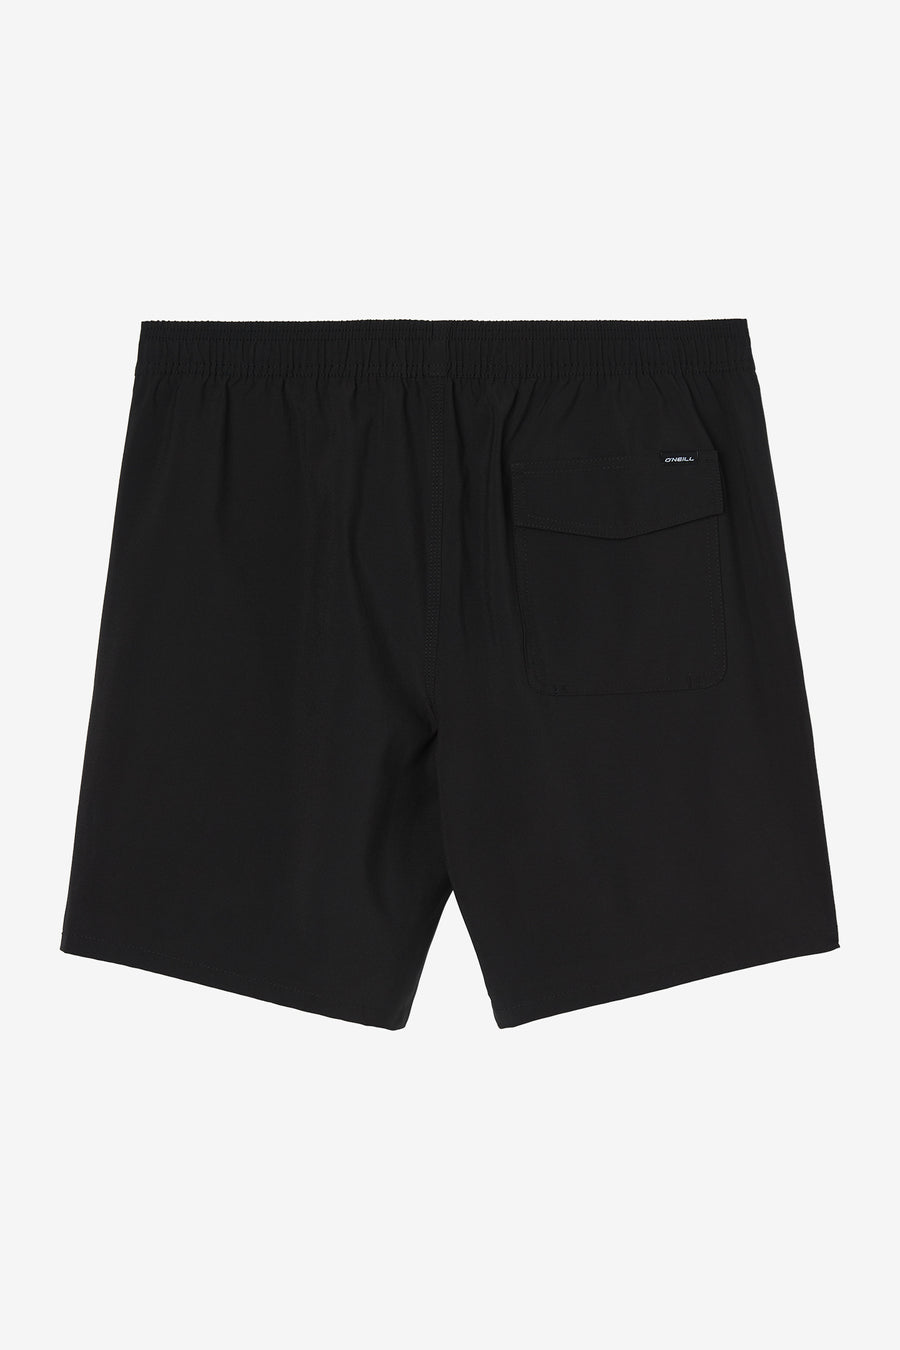 Hermosa Solid 17" Elastic Waist Swim Shorts - Black